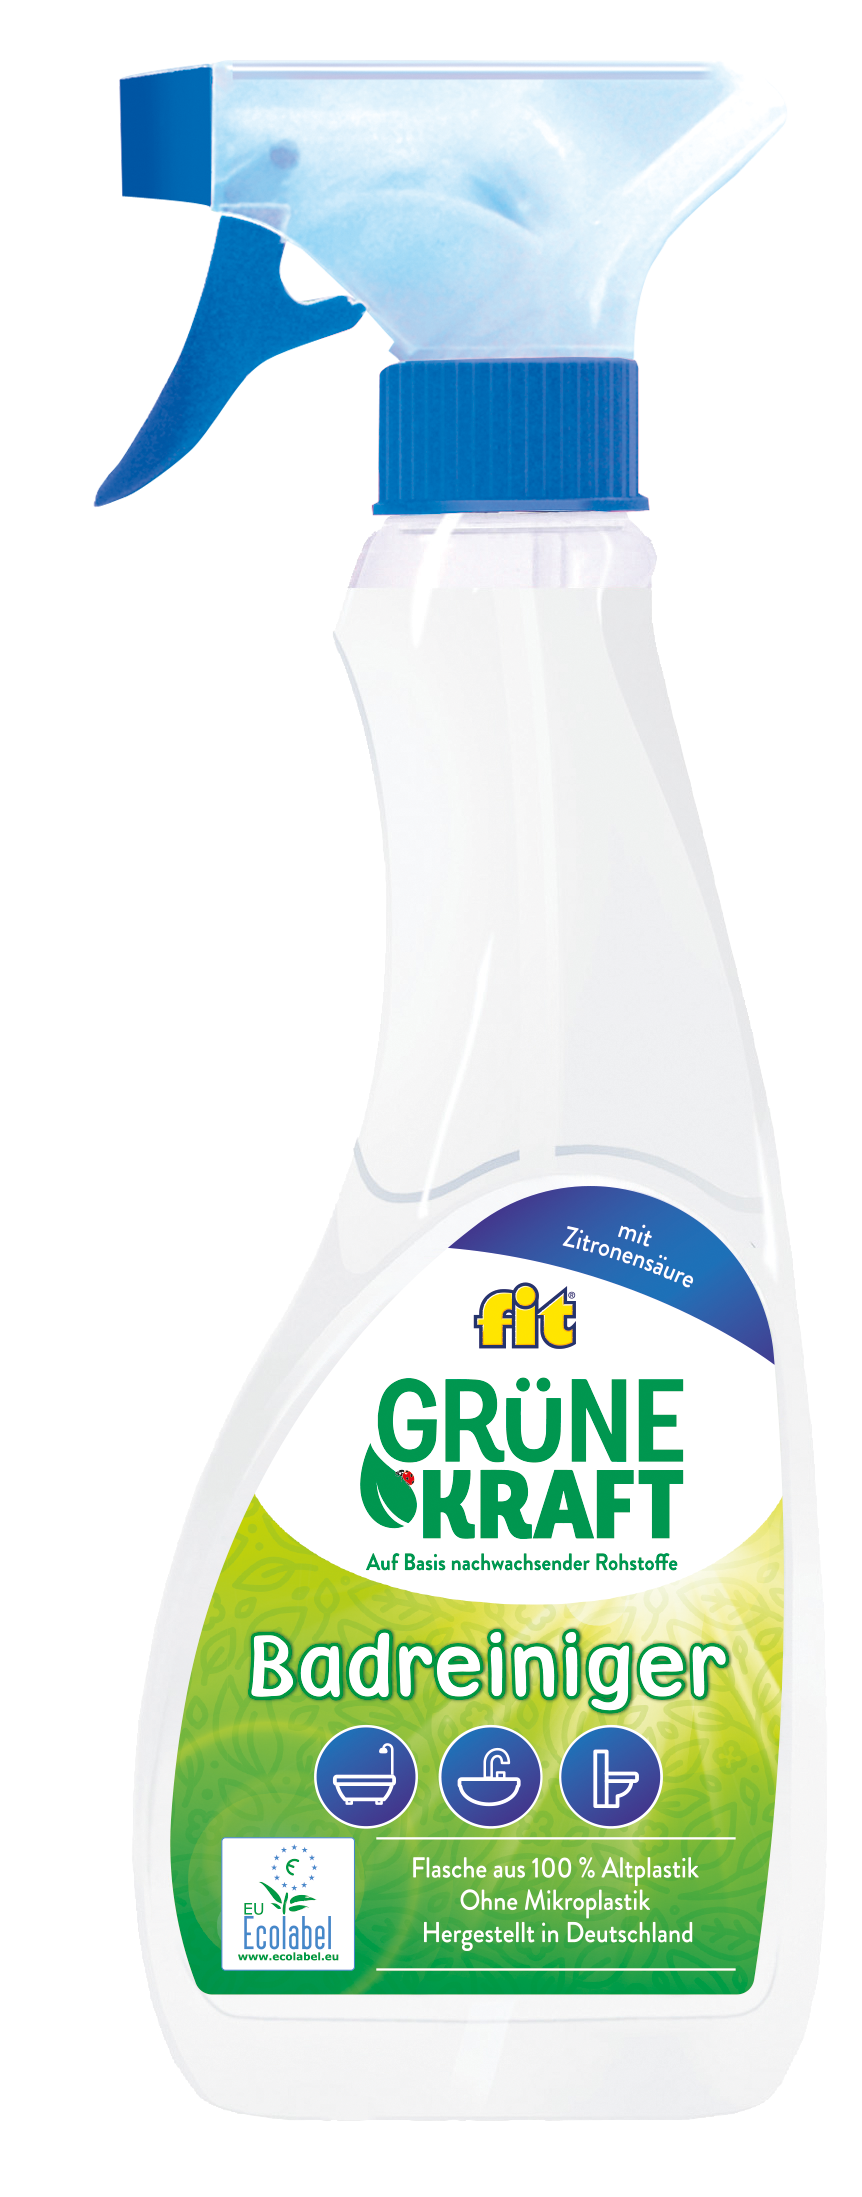 fit Grüne Kraft Badreiniger